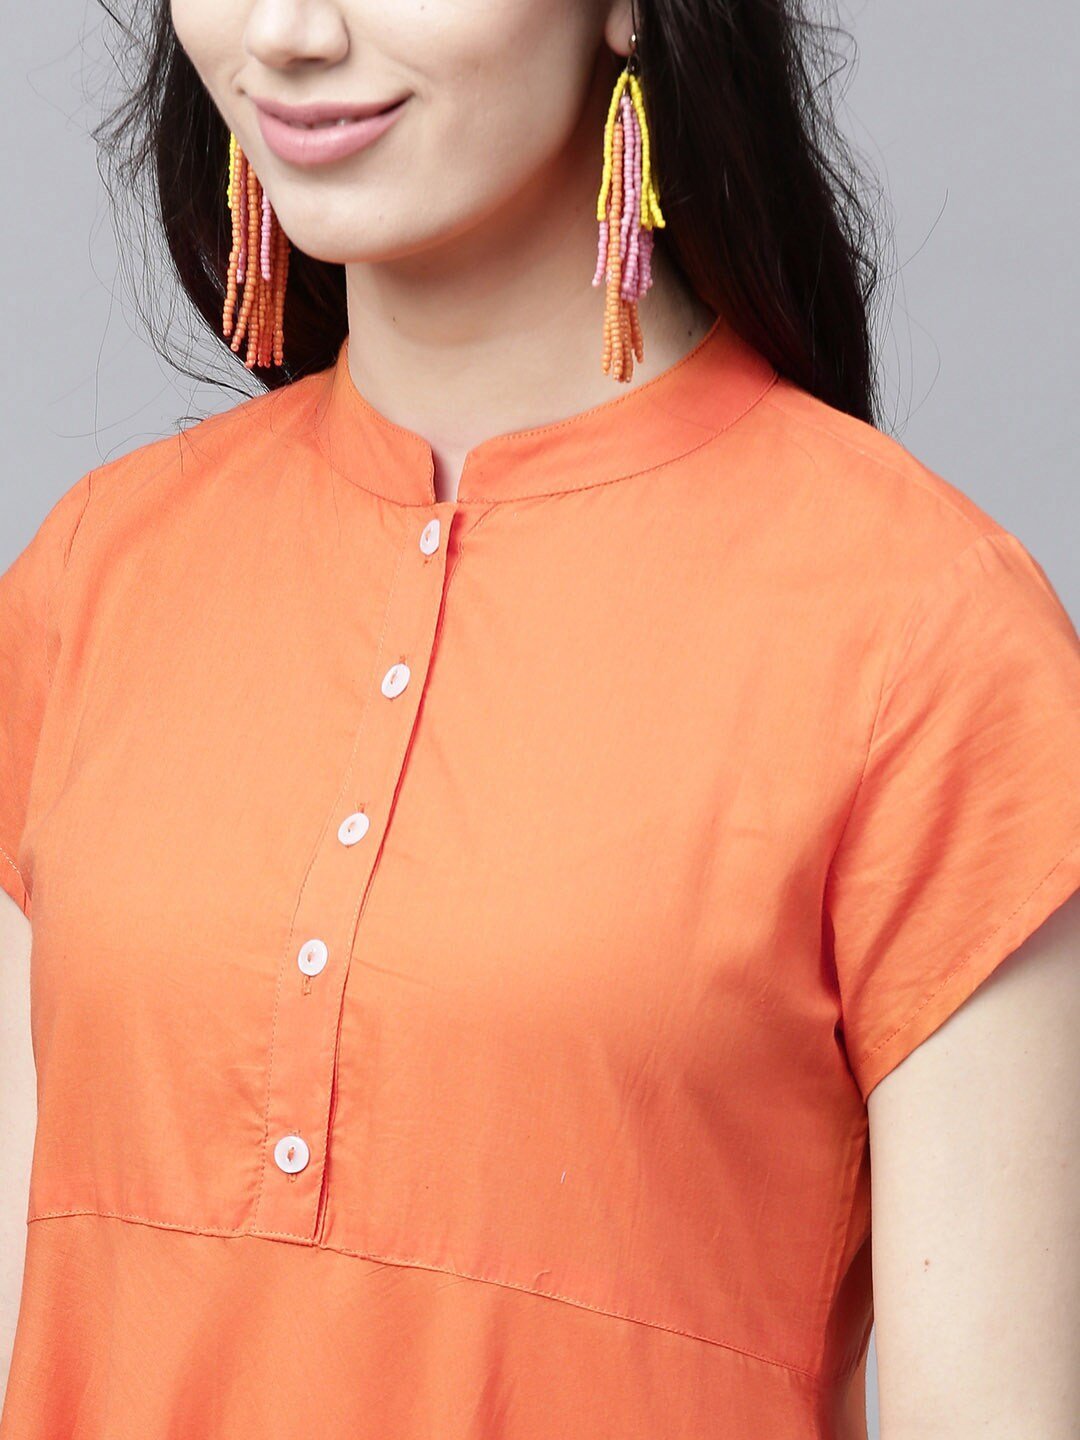 Women's  Orange Printed Detail Maxi Dress - AKS